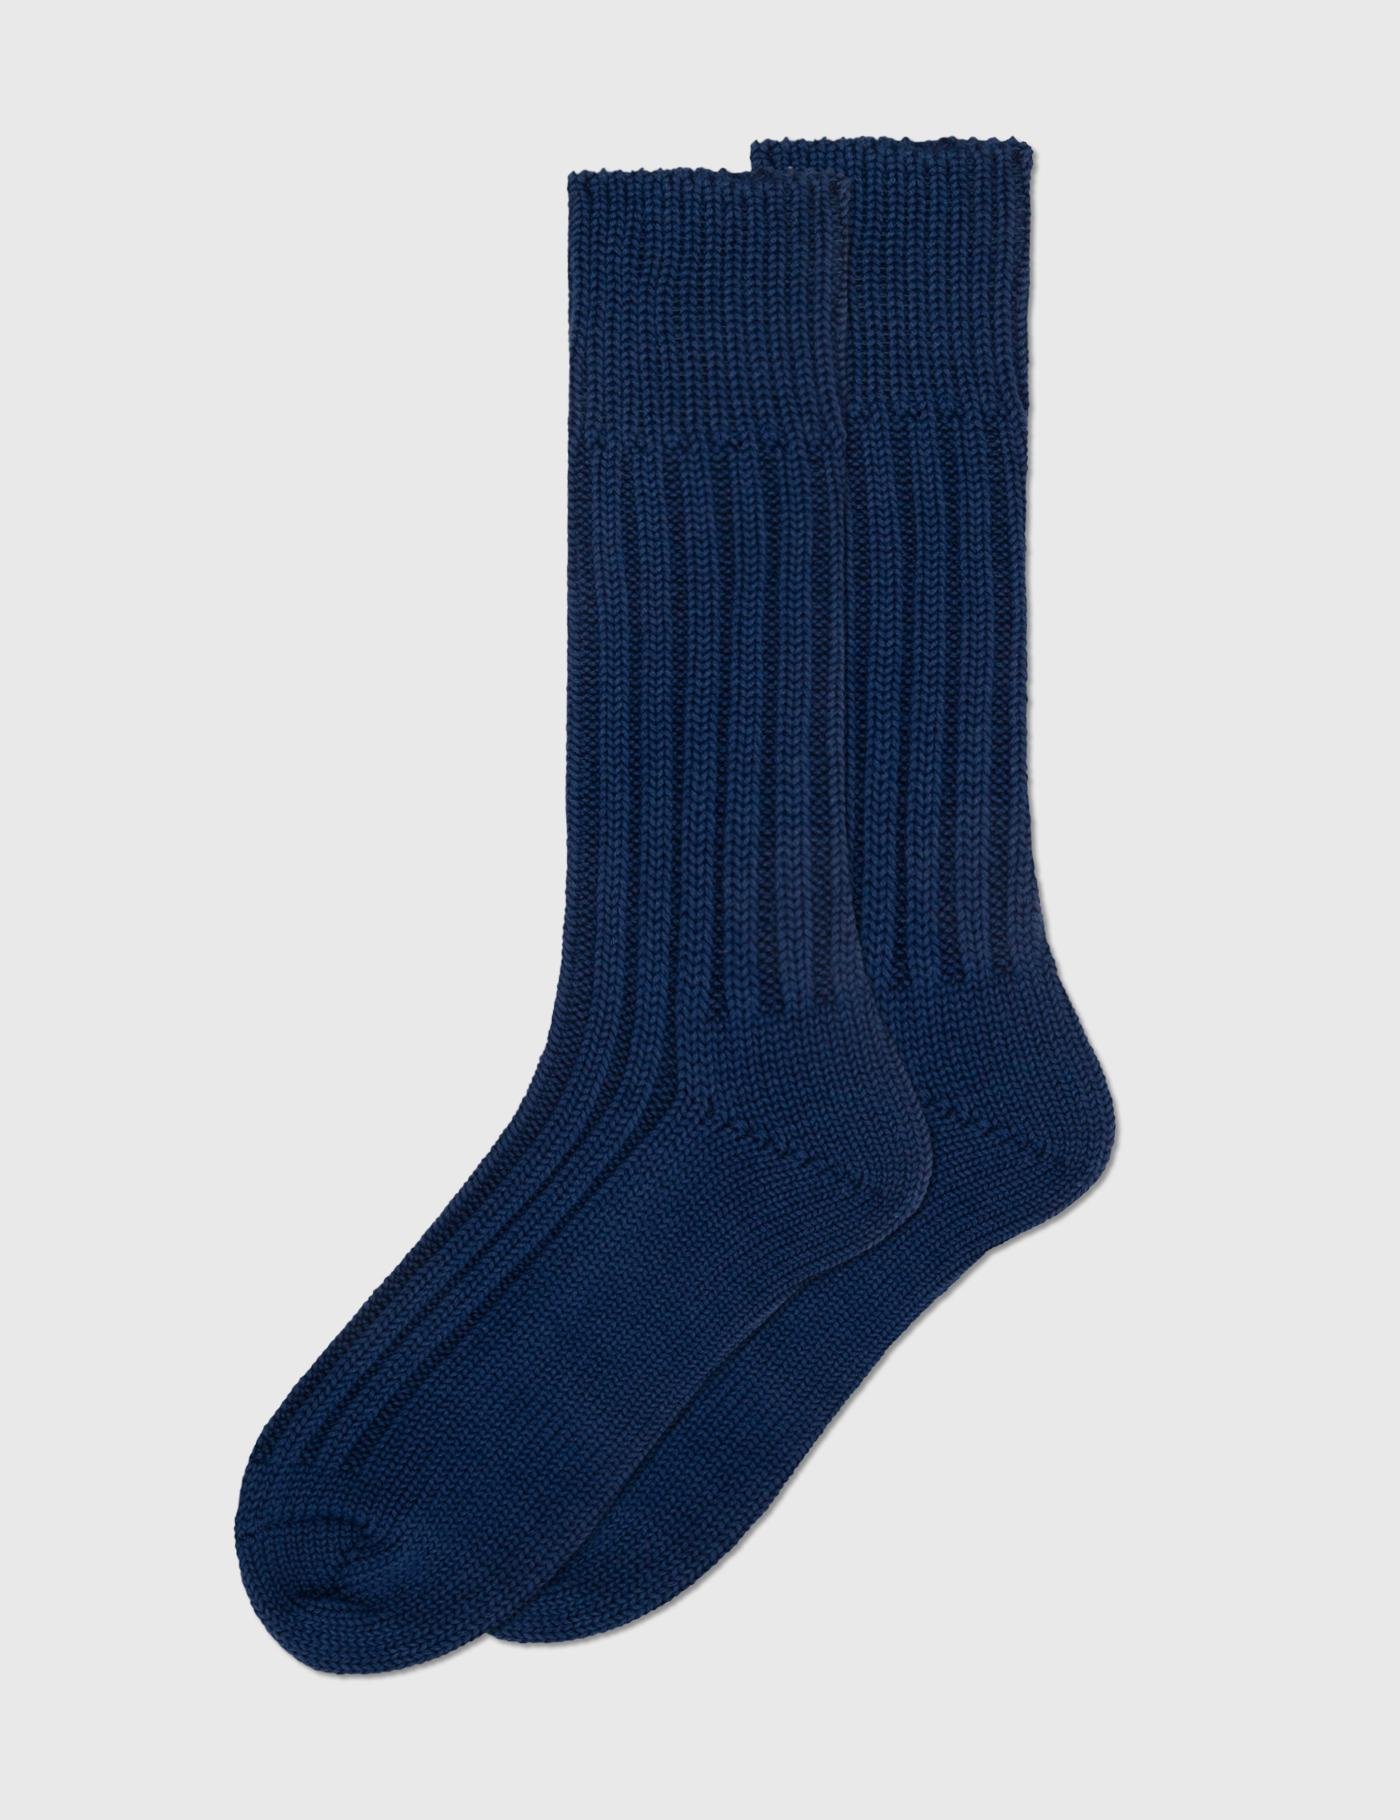 Cased Heavyweight Plain Socks by DECKA SOCKS